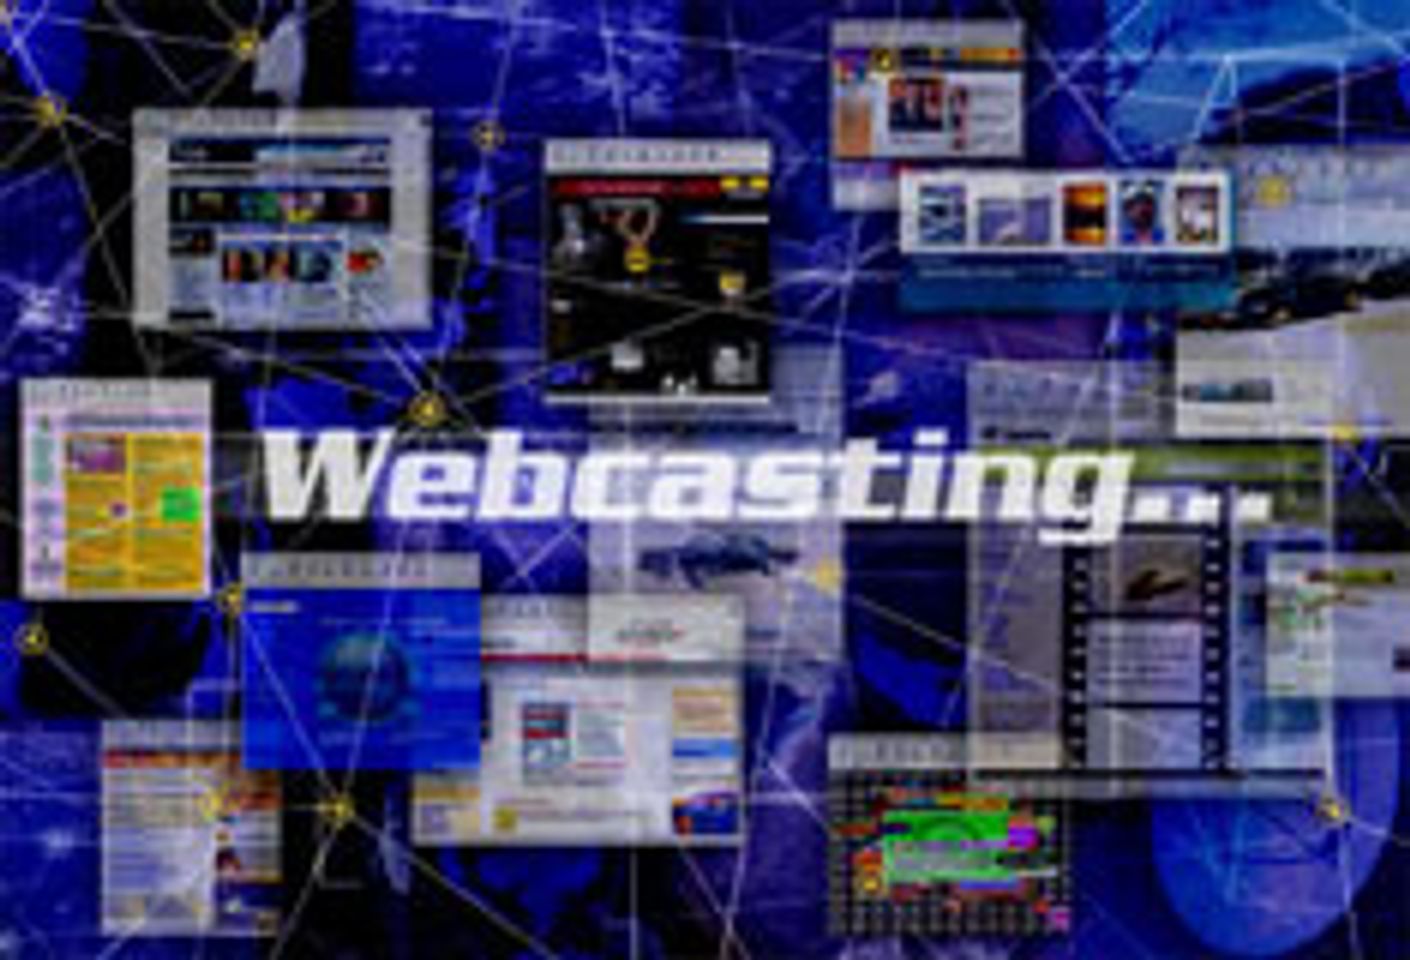 Webcast Treaty Raises Questions On Public Domain Viewing